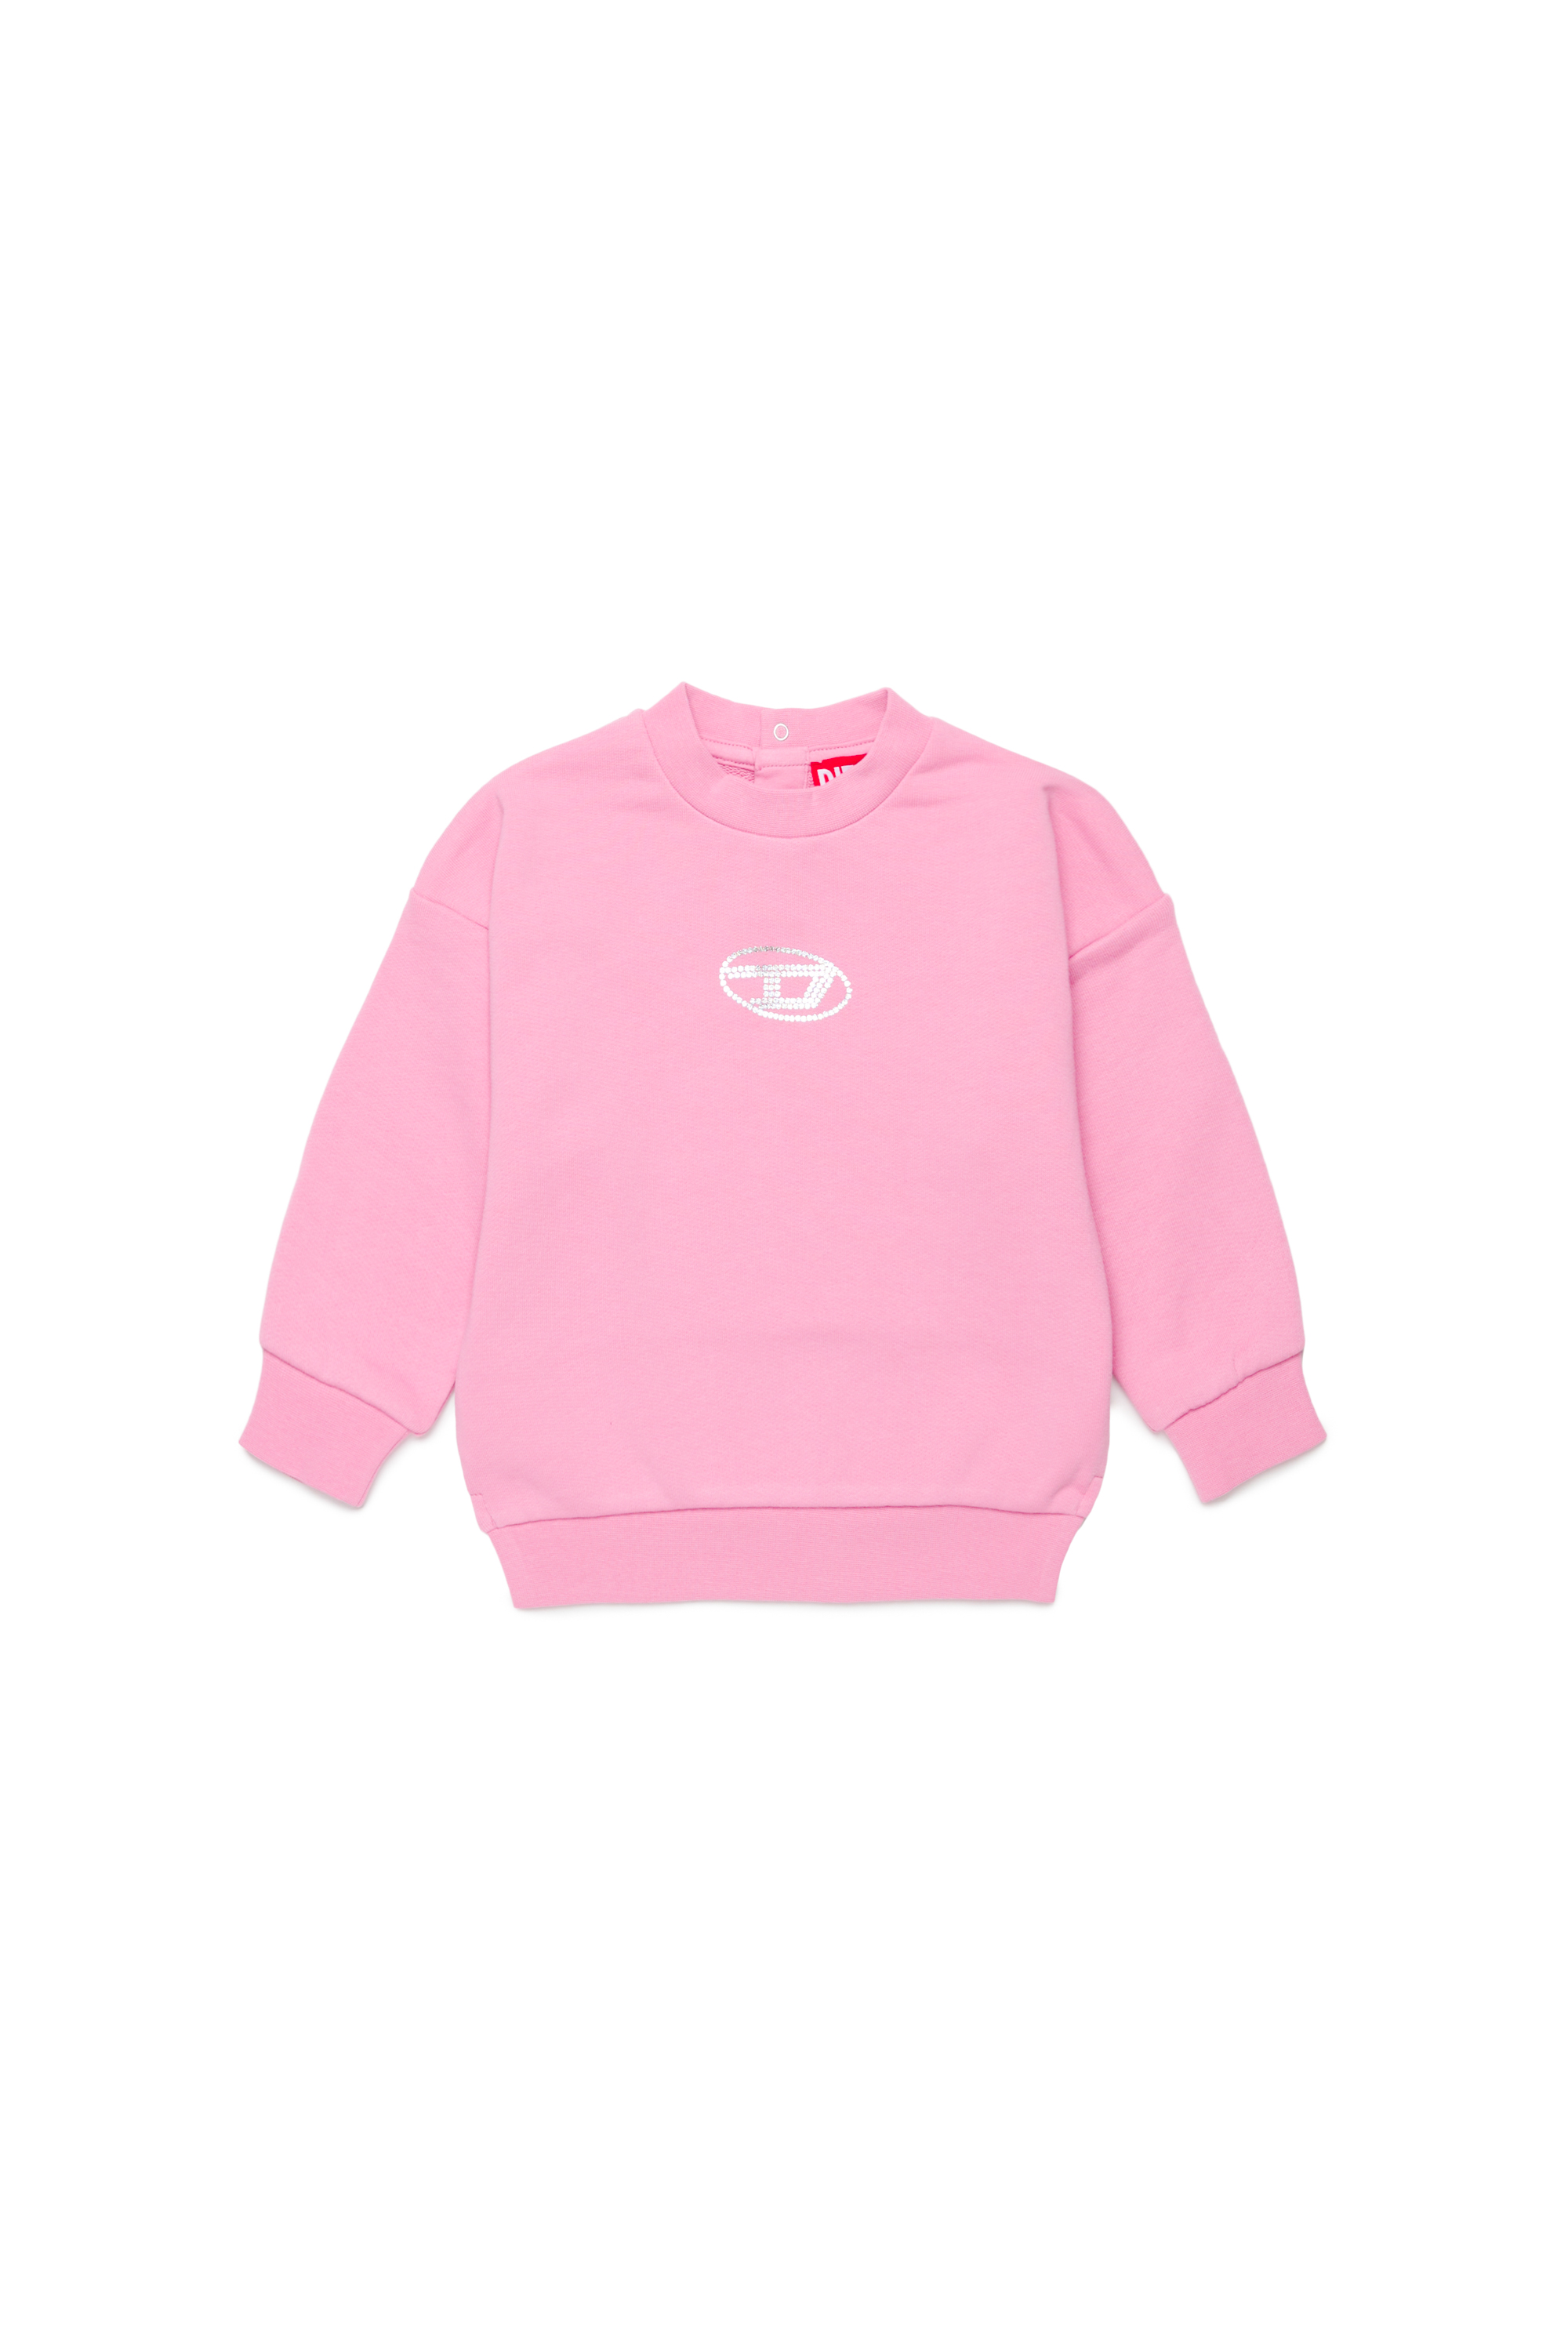 Diesel - STILTYB, Woman Sweatshirt with crystal Oval D logo in Pink - Image 1